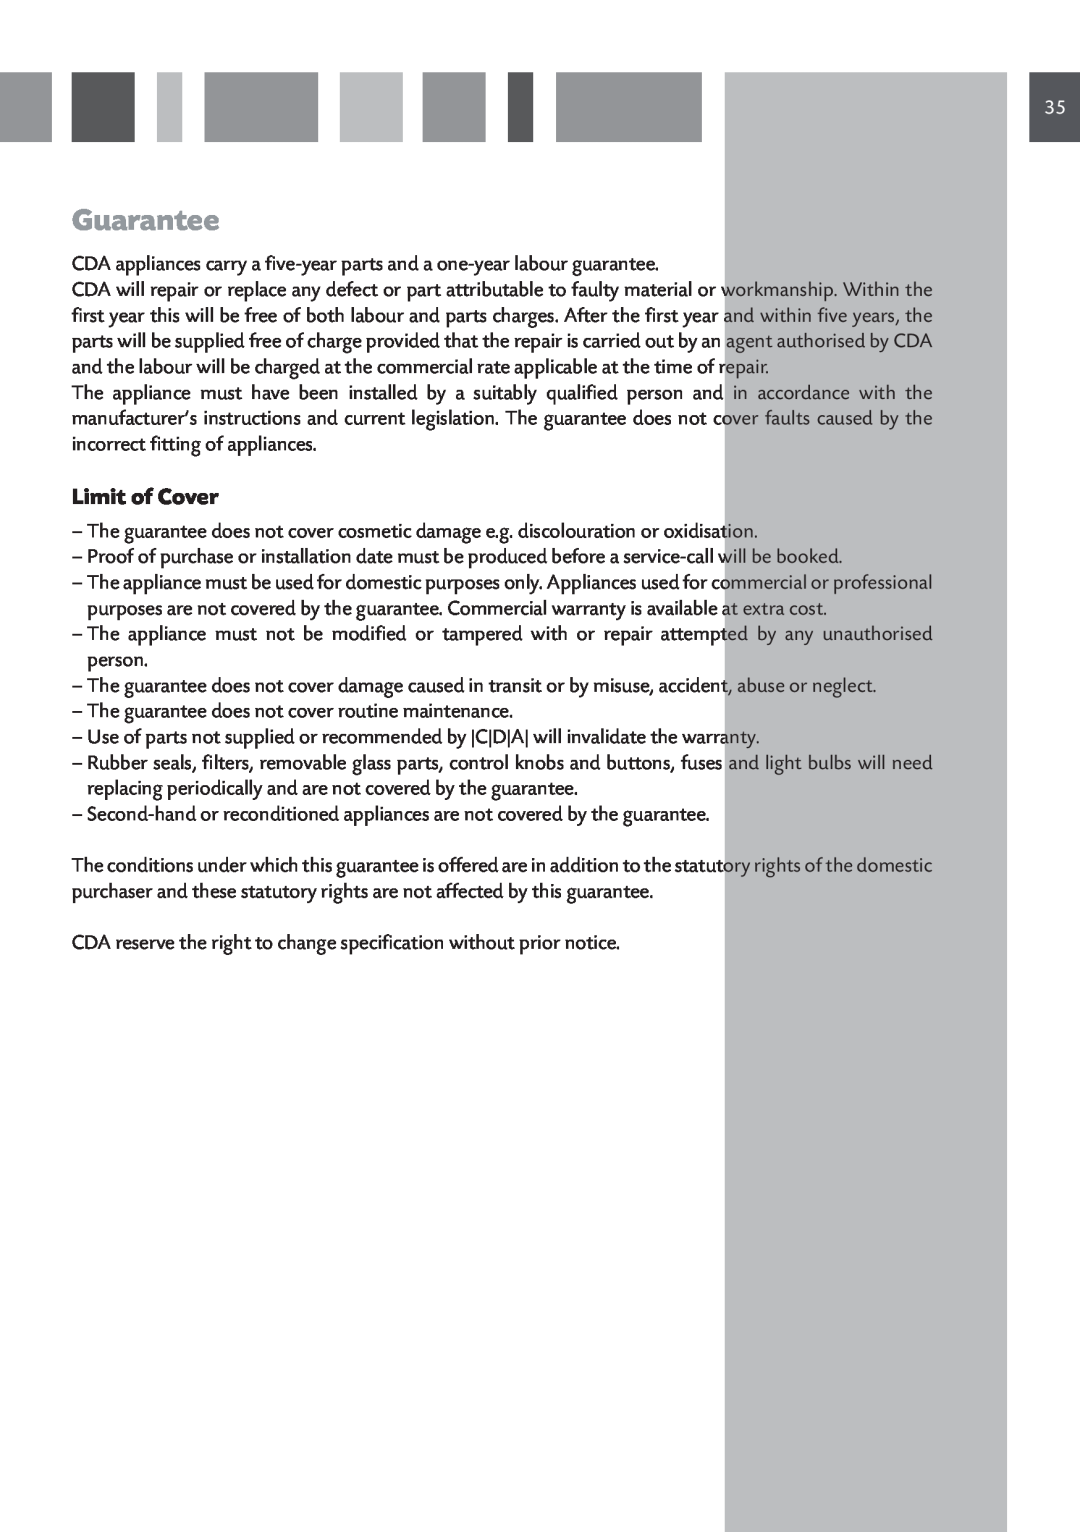 CDA DC730 manual Guarantee, Limit of Cover 